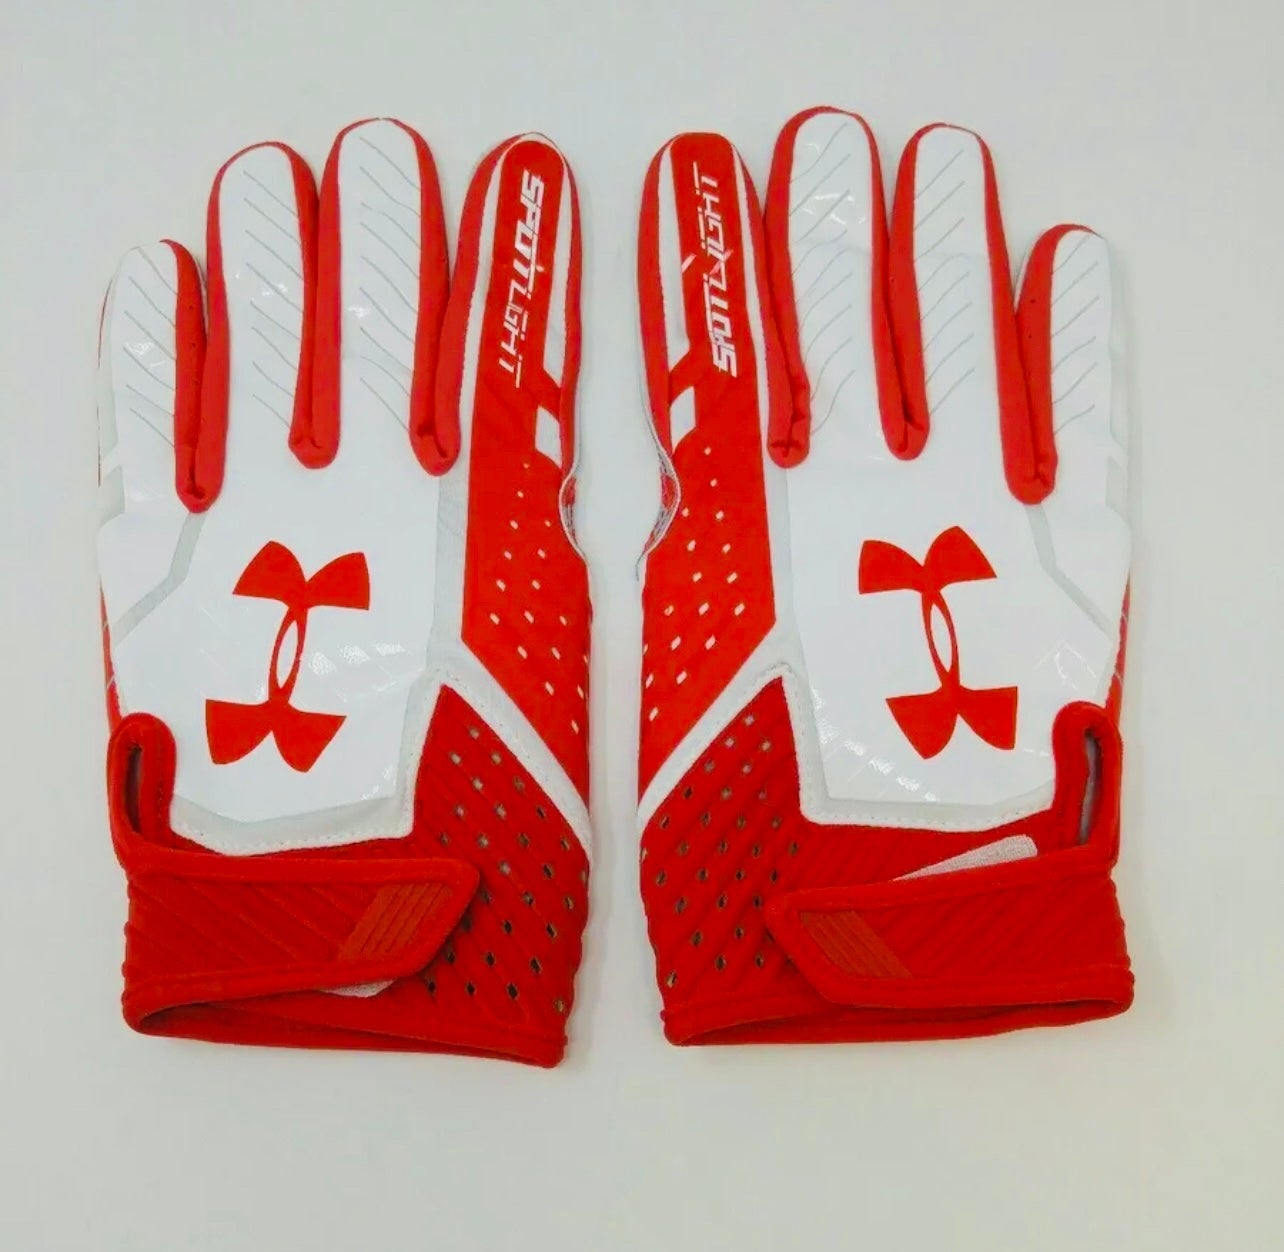 Under Armour Spotlight Medium Football Red Gloves 1326218 600 for sale online 